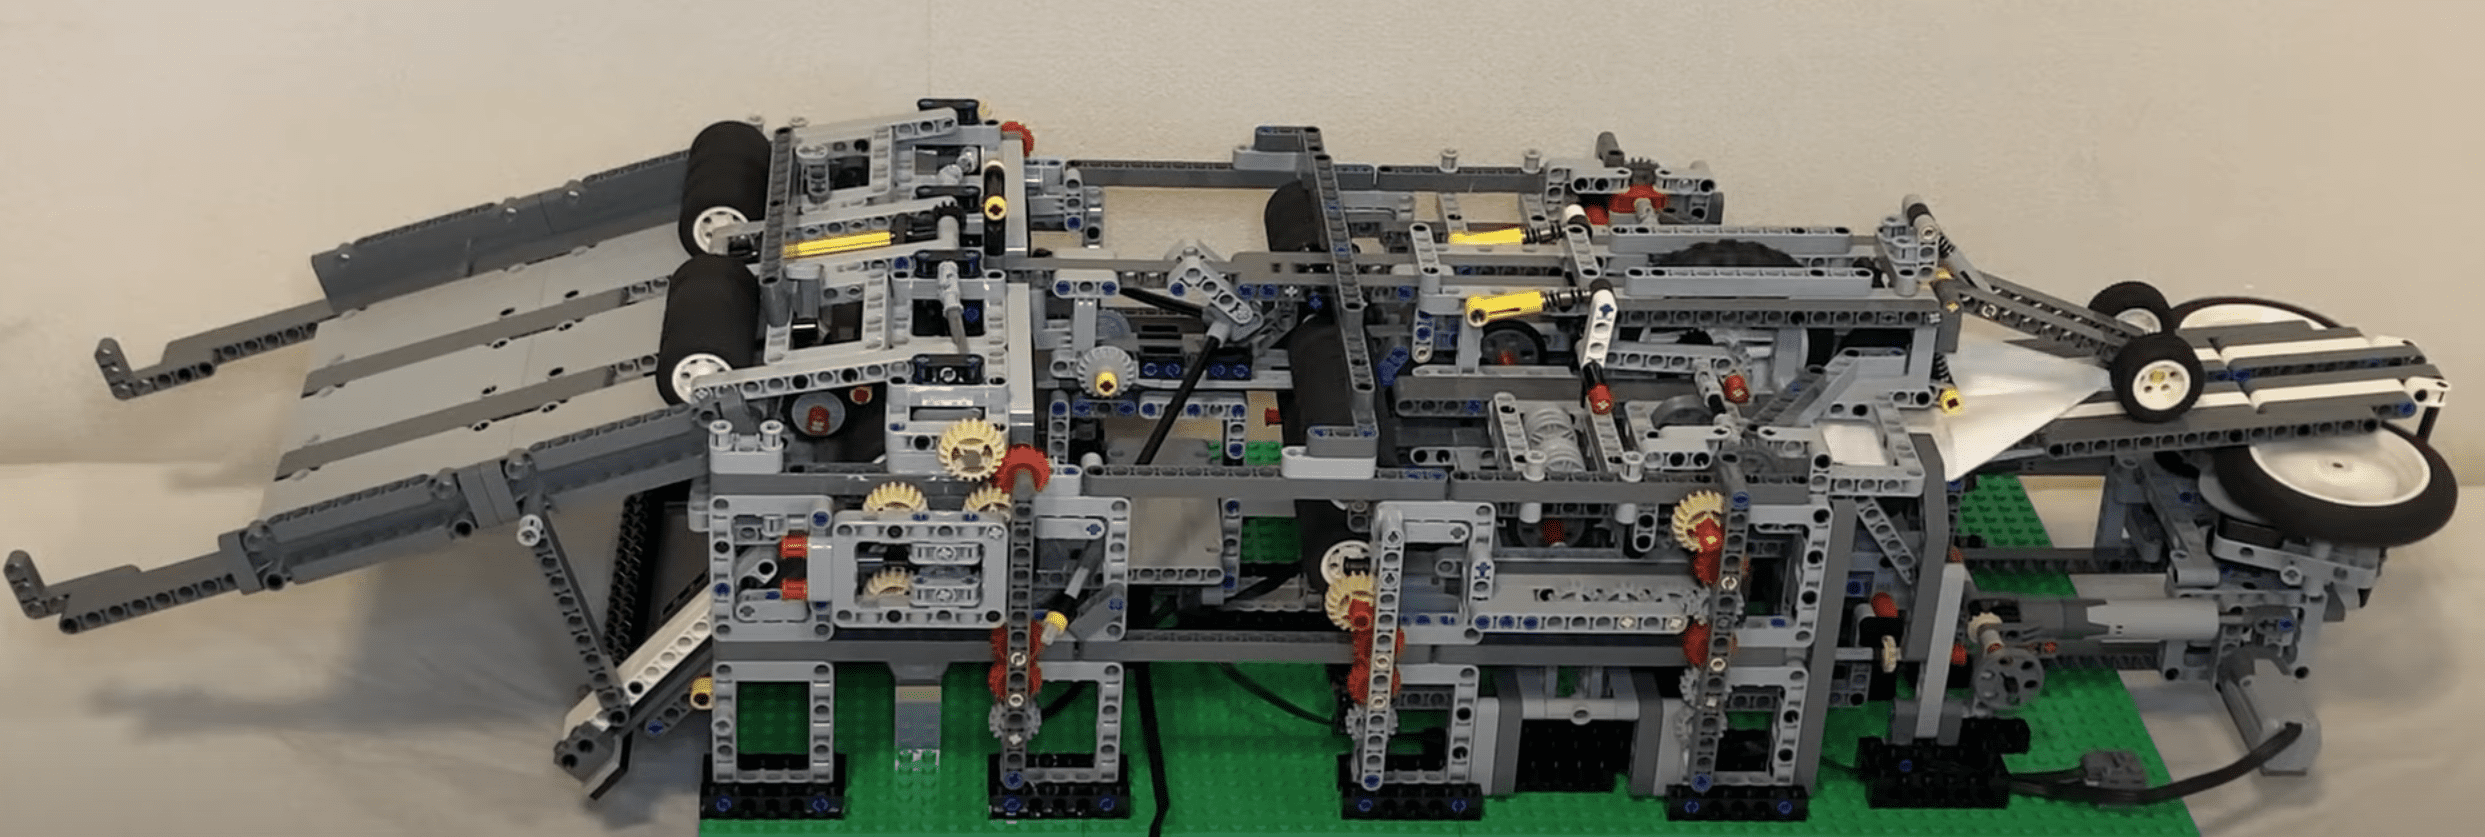 Lego Technics paper airplane machine